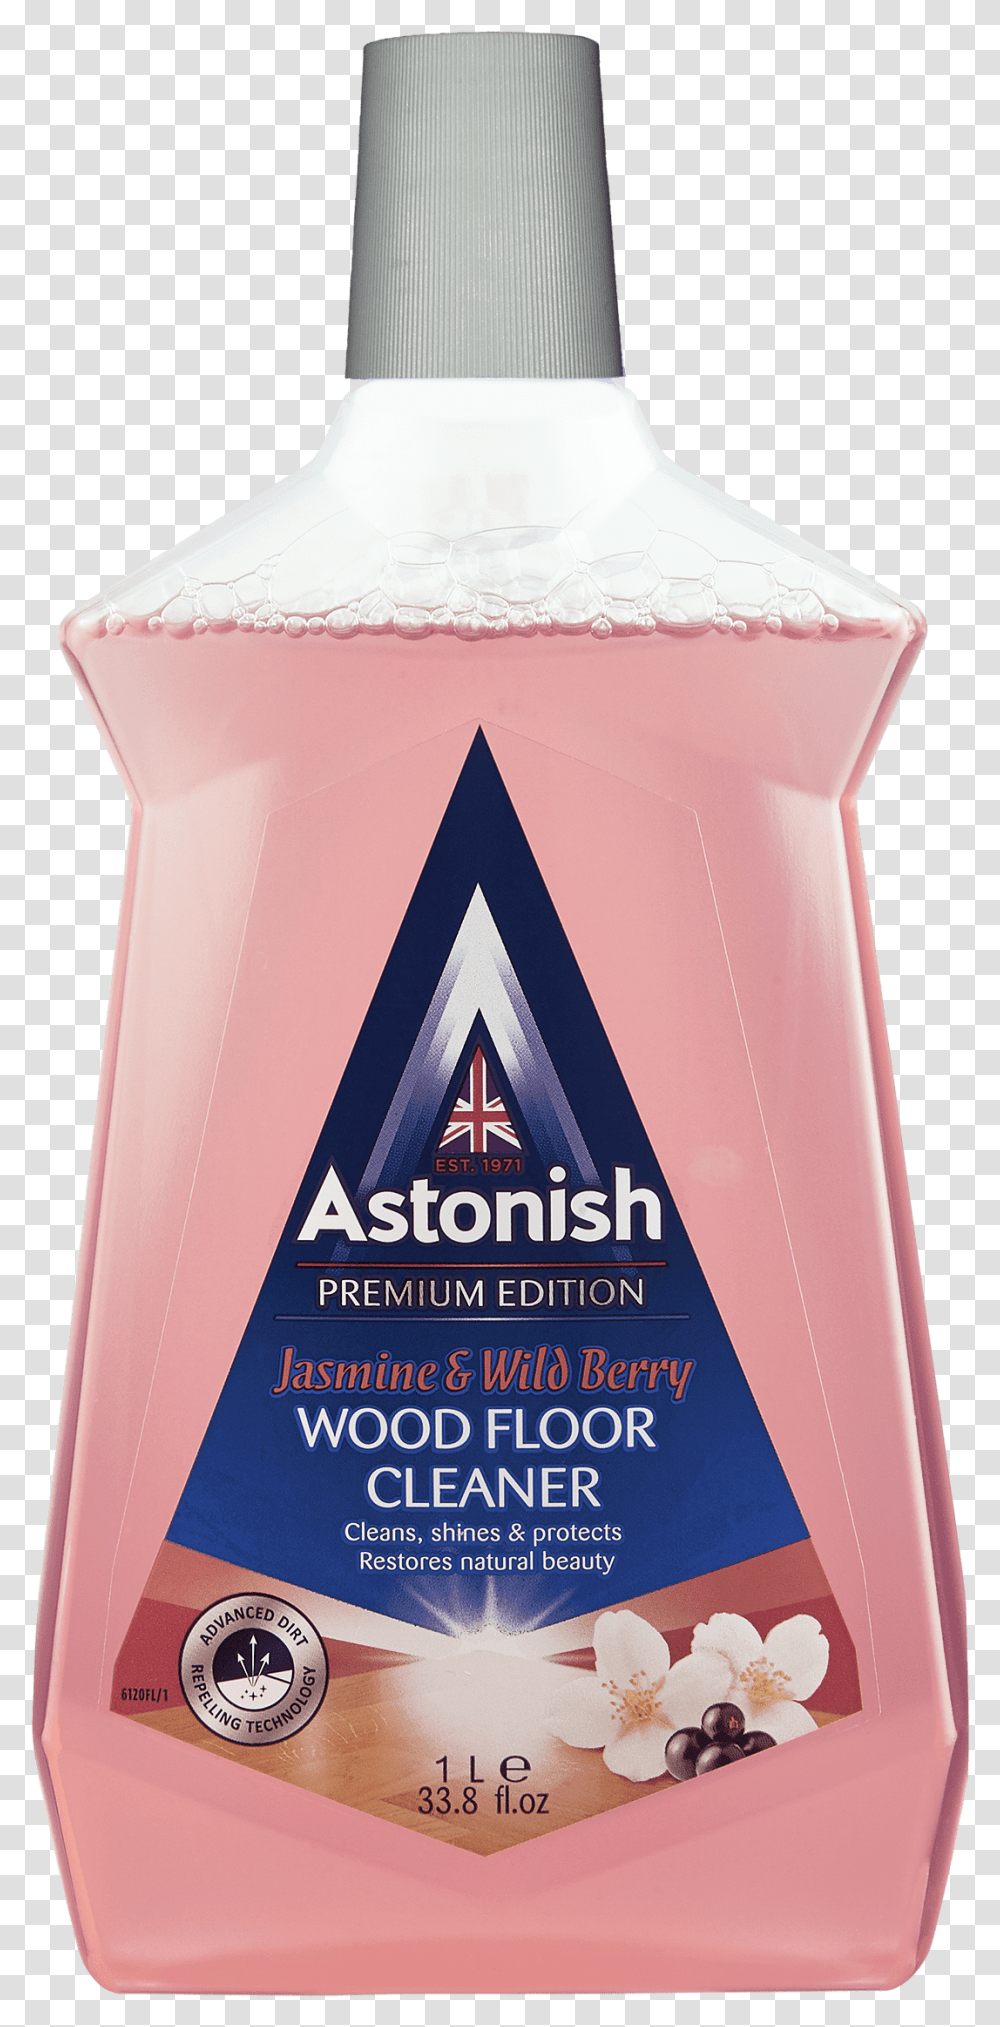 Premium Edition Wood Floor Cleaner Astonish Wood Floor Cleaner, Cosmetics, Bottle, Wedding Cake, Dessert Transparent Png